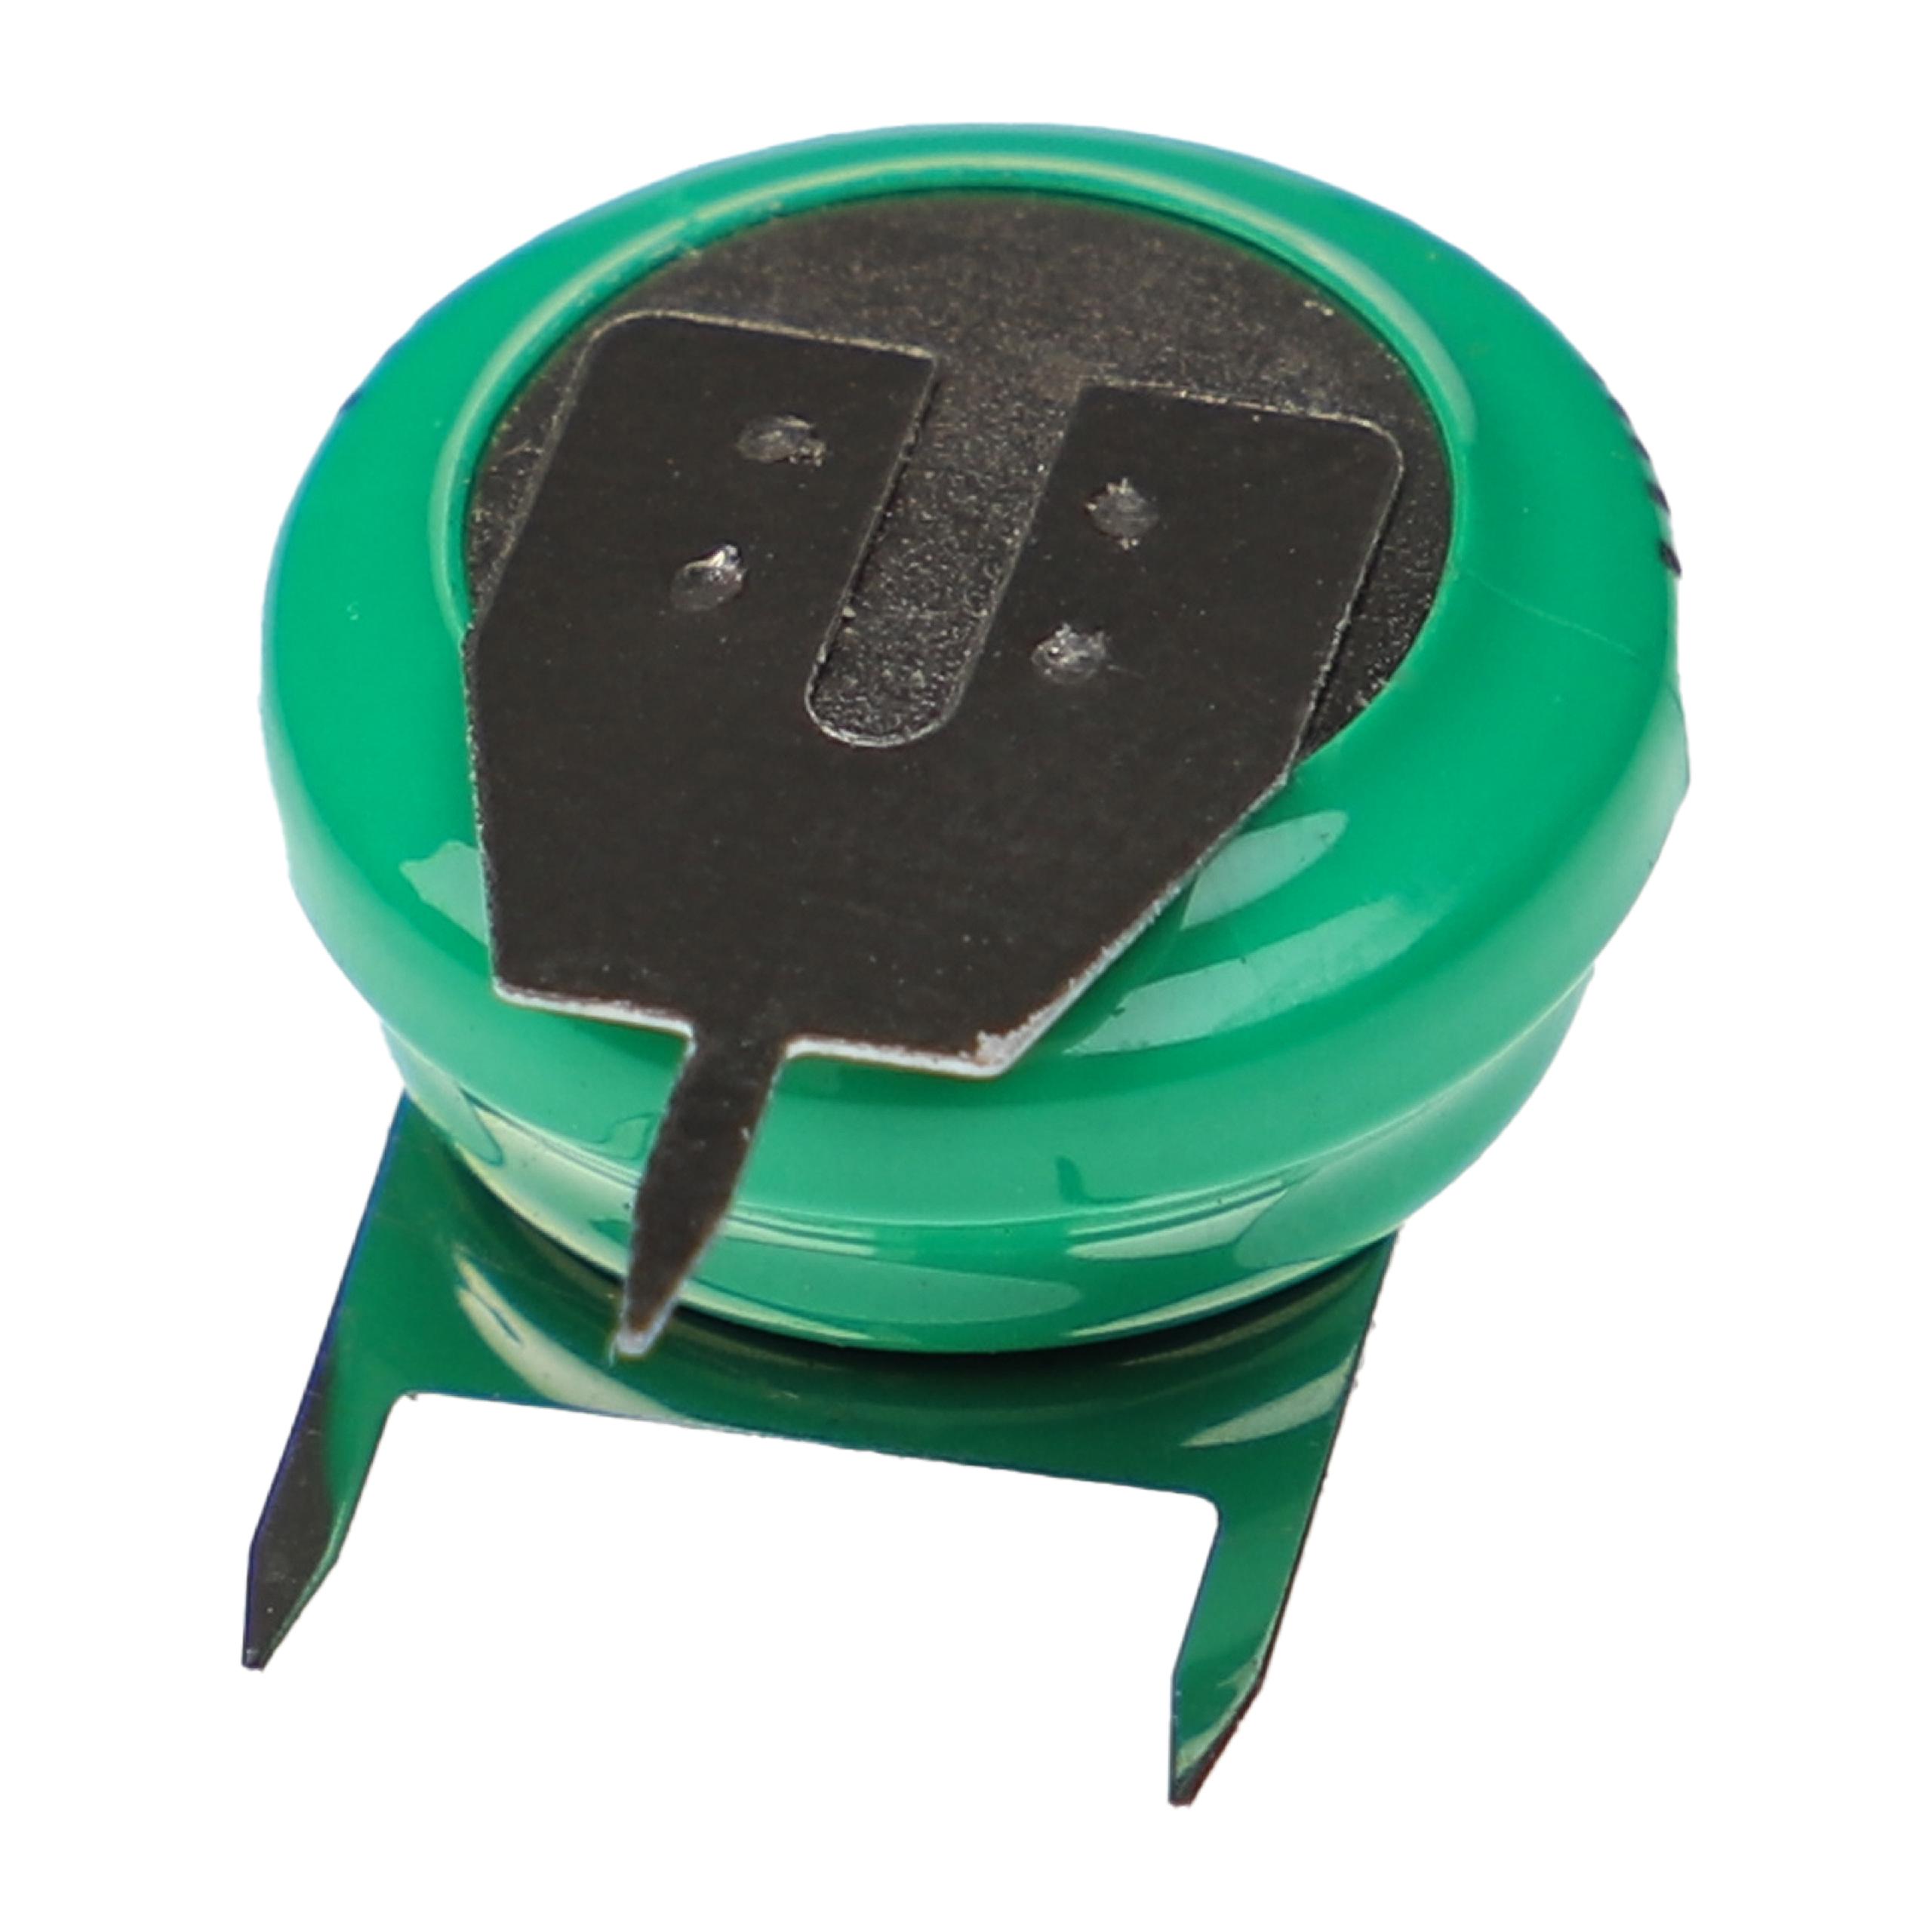 Akumulator guzikowy (1x ogniwo) typ 3 pin do modeli, lamp solarnych itp. zamiennik - 80 mAh 1,2 V NiMH